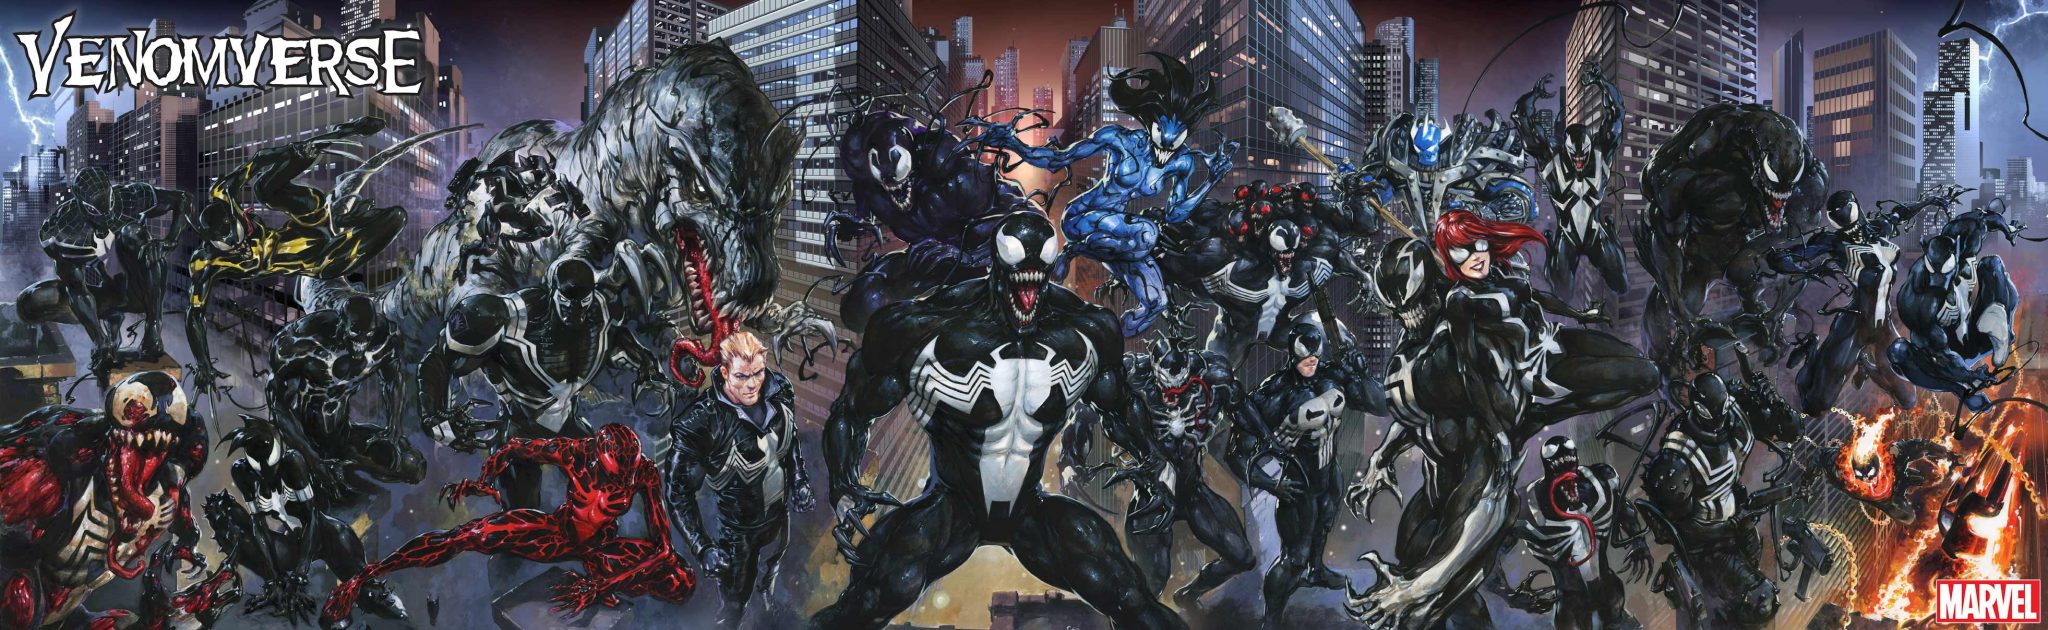 Marvel Comics News Digest 5/29 – 6/2/17 Featuring Venomverse